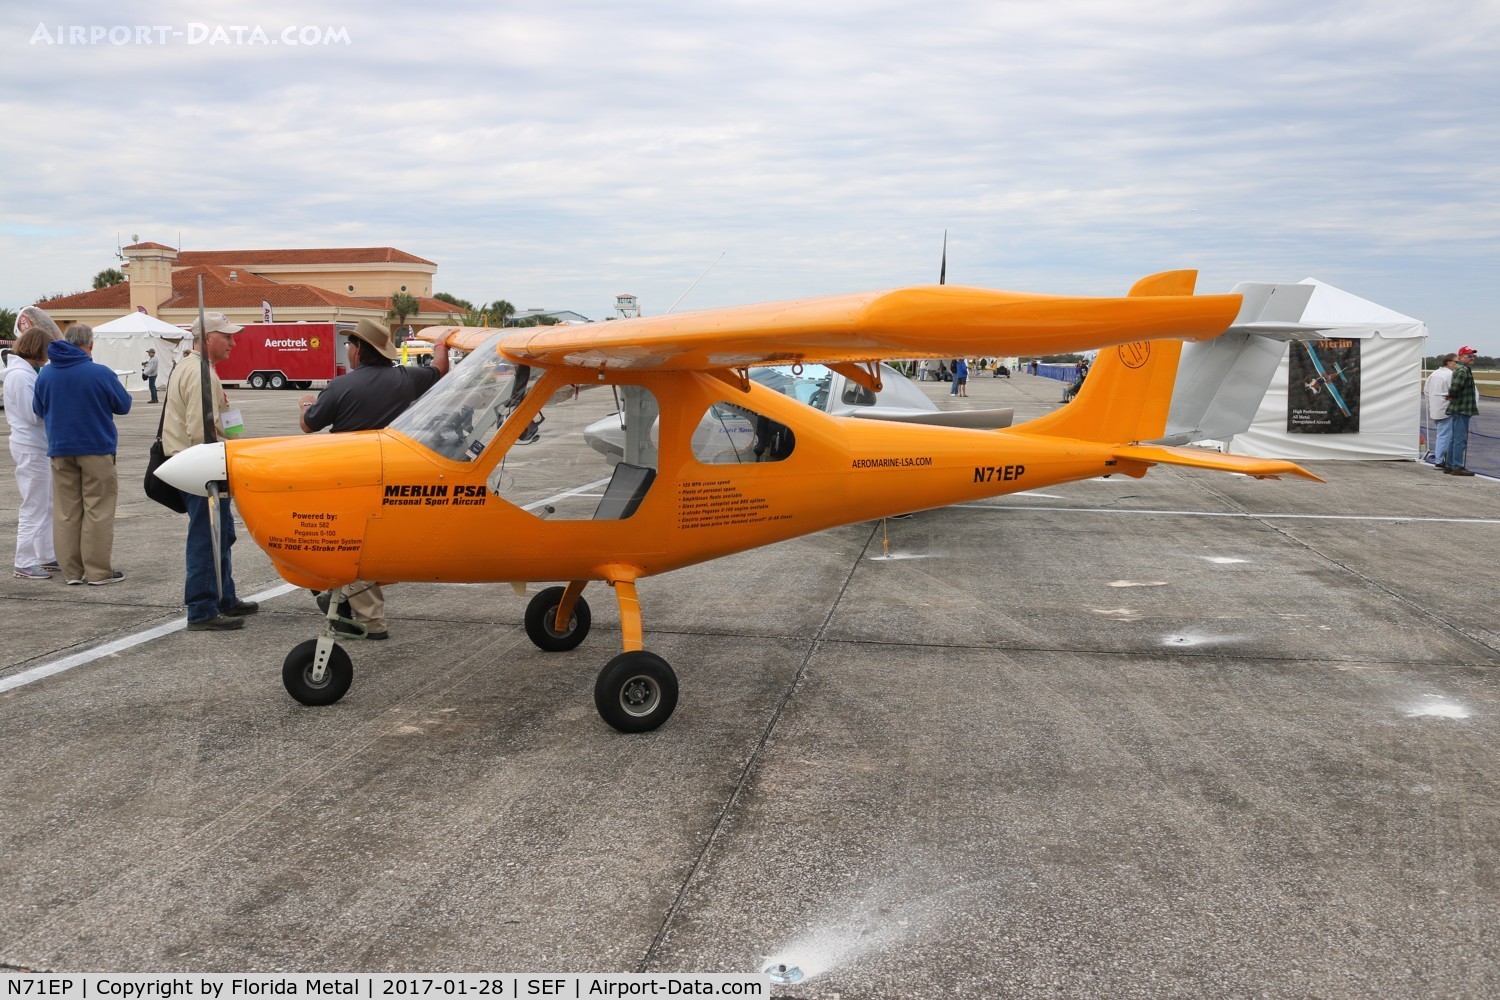 N71EP, 2015 Aeromarine Consulting Inc E-Plane C/N 15EP001, Aeromarine E-Plane